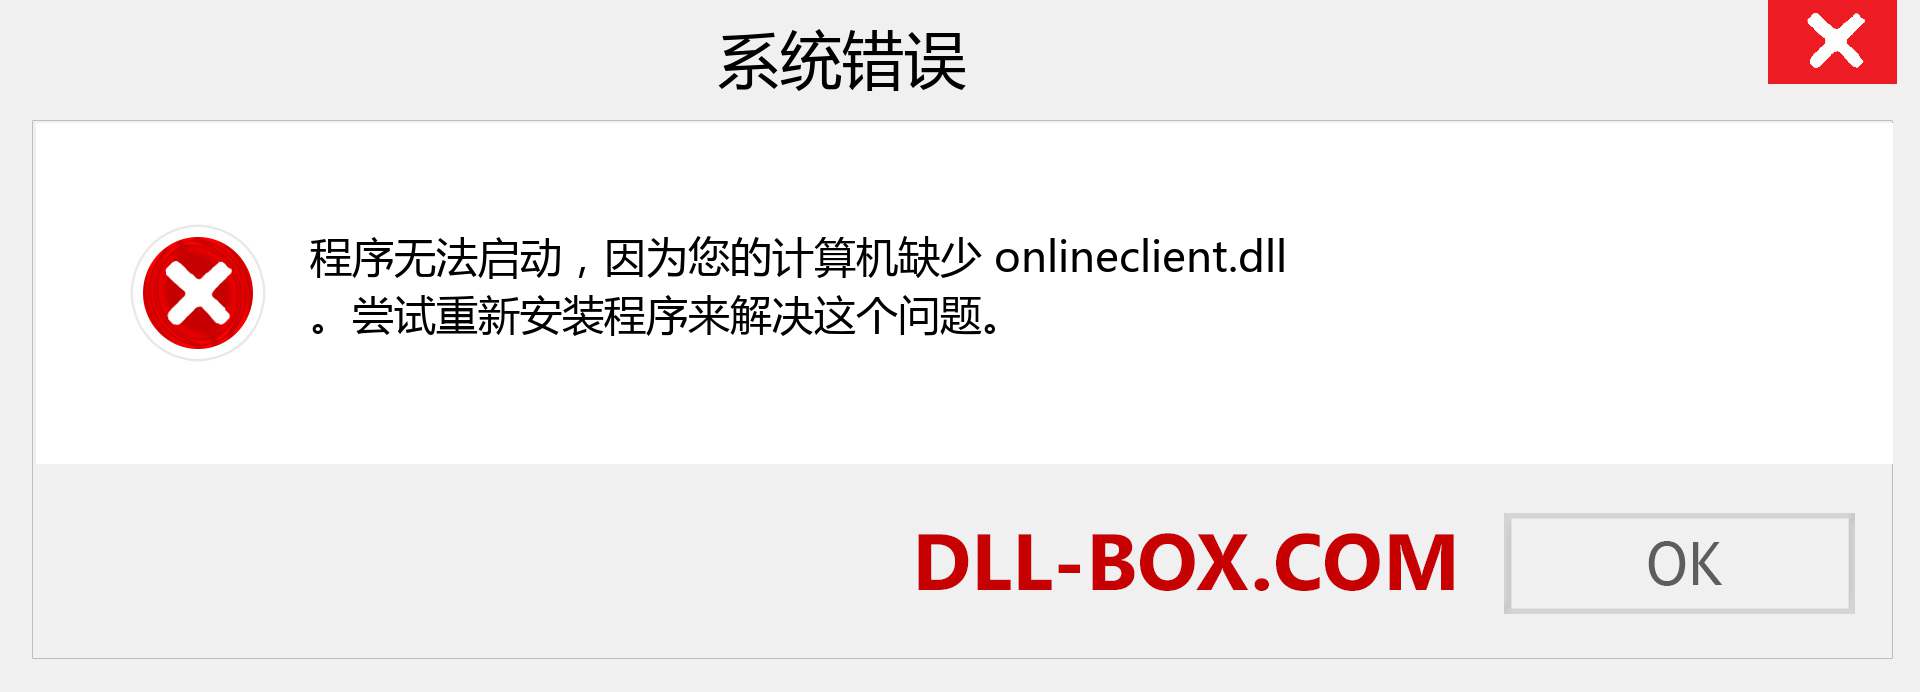 onlineclient.dll 文件丢失？。 适用于 Windows 7、8、10 的下载 - 修复 Windows、照片、图像上的 onlineclient dll 丢失错误